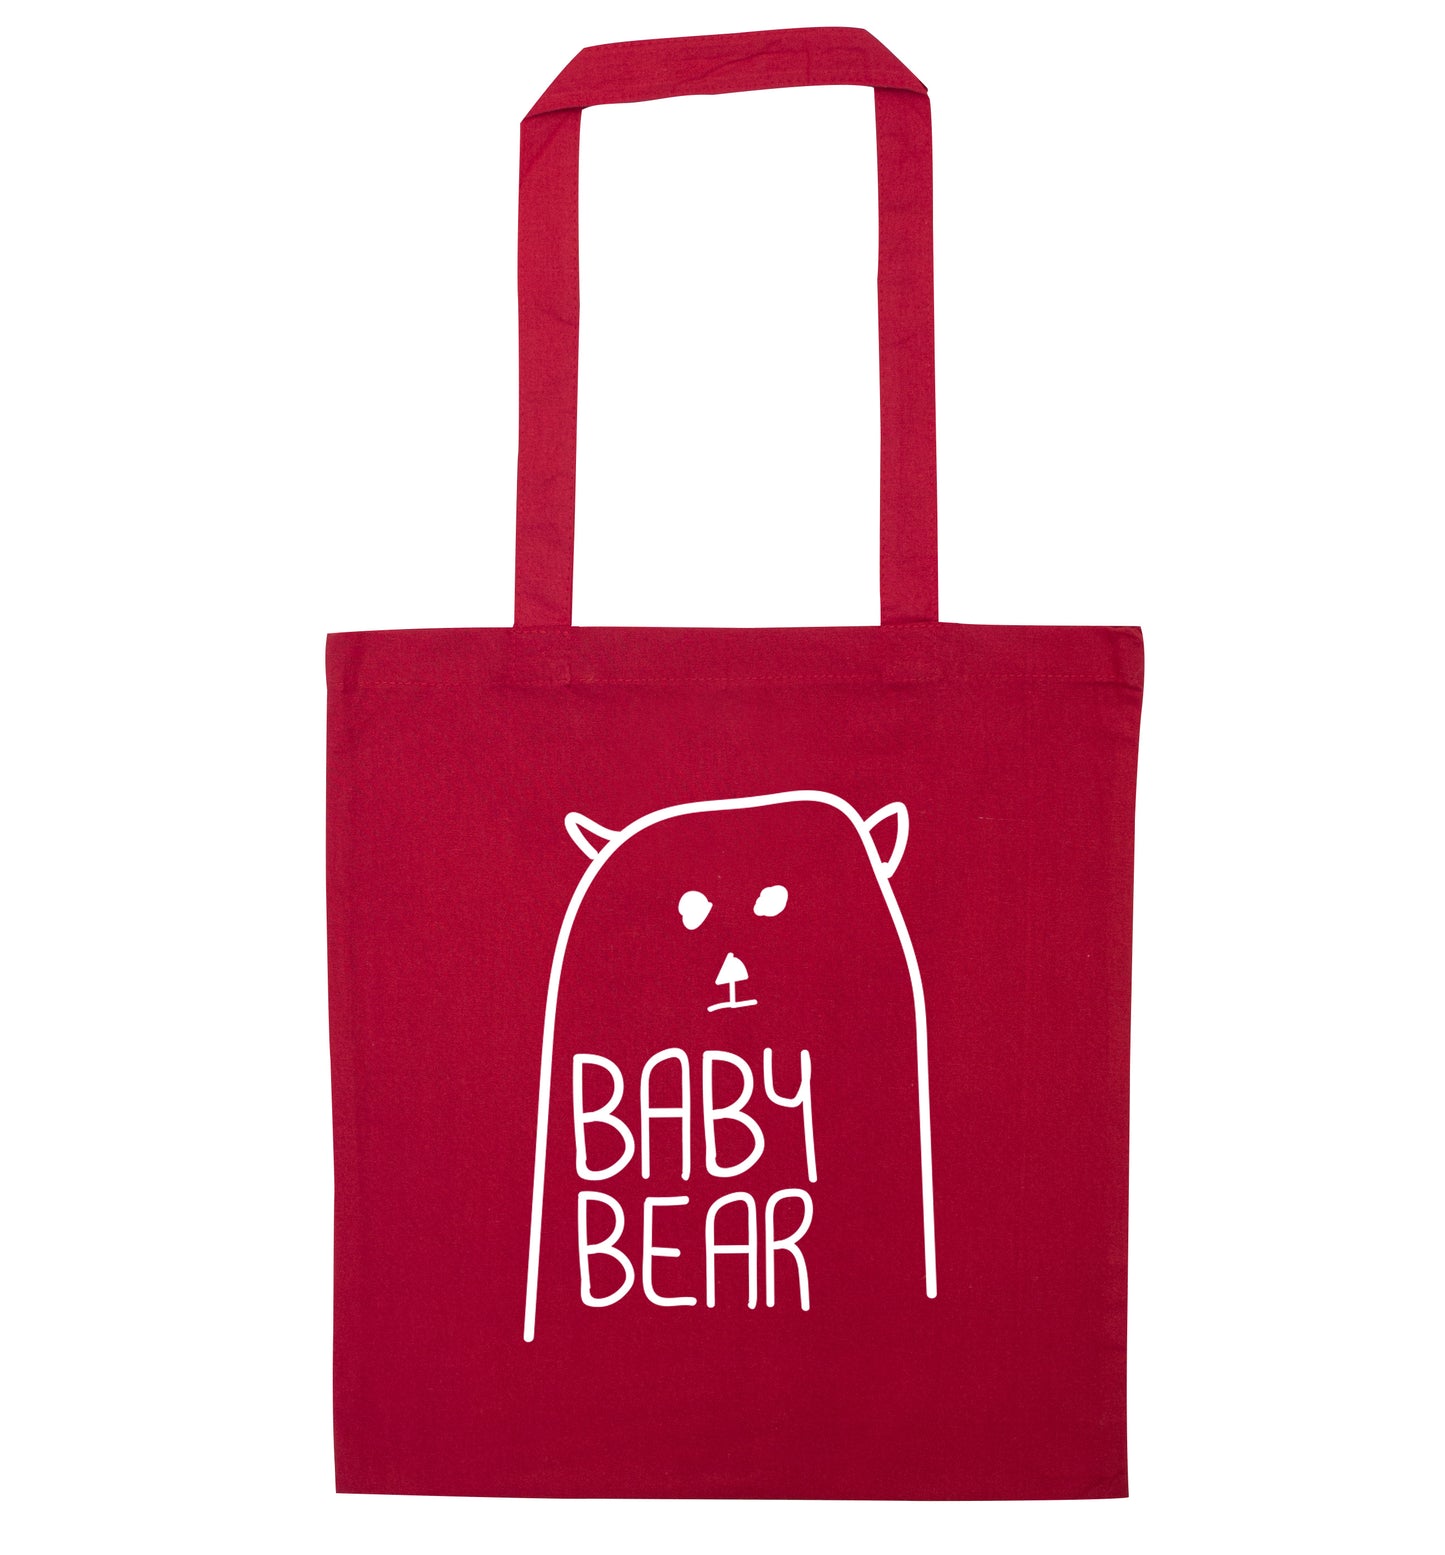 Baby bear red tote bag